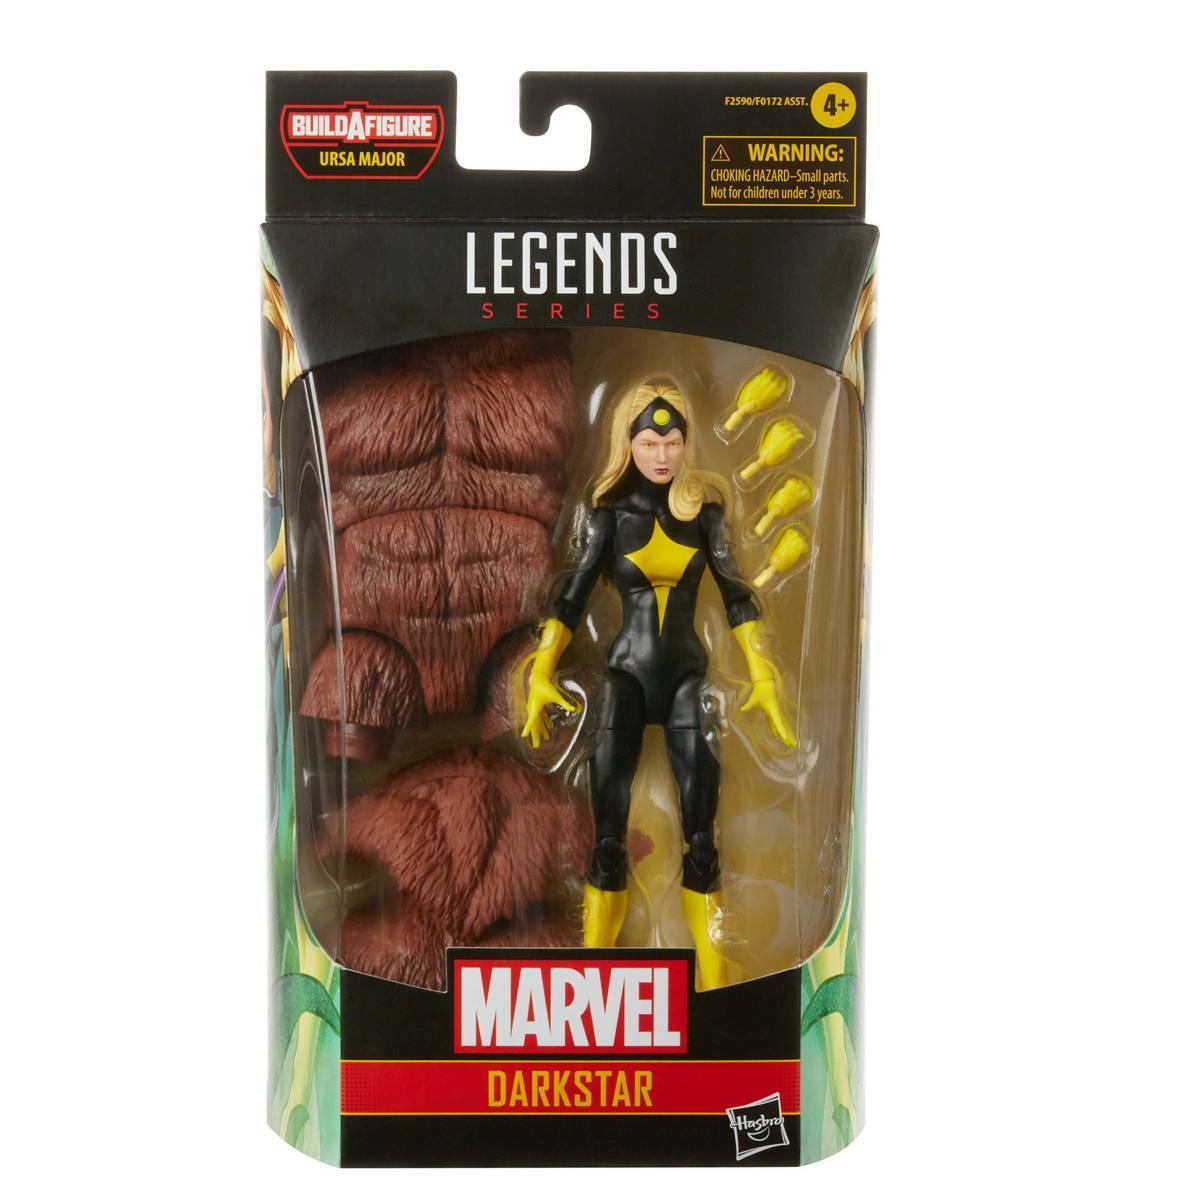 Marvel Legends Series Action Figure - Darkstar